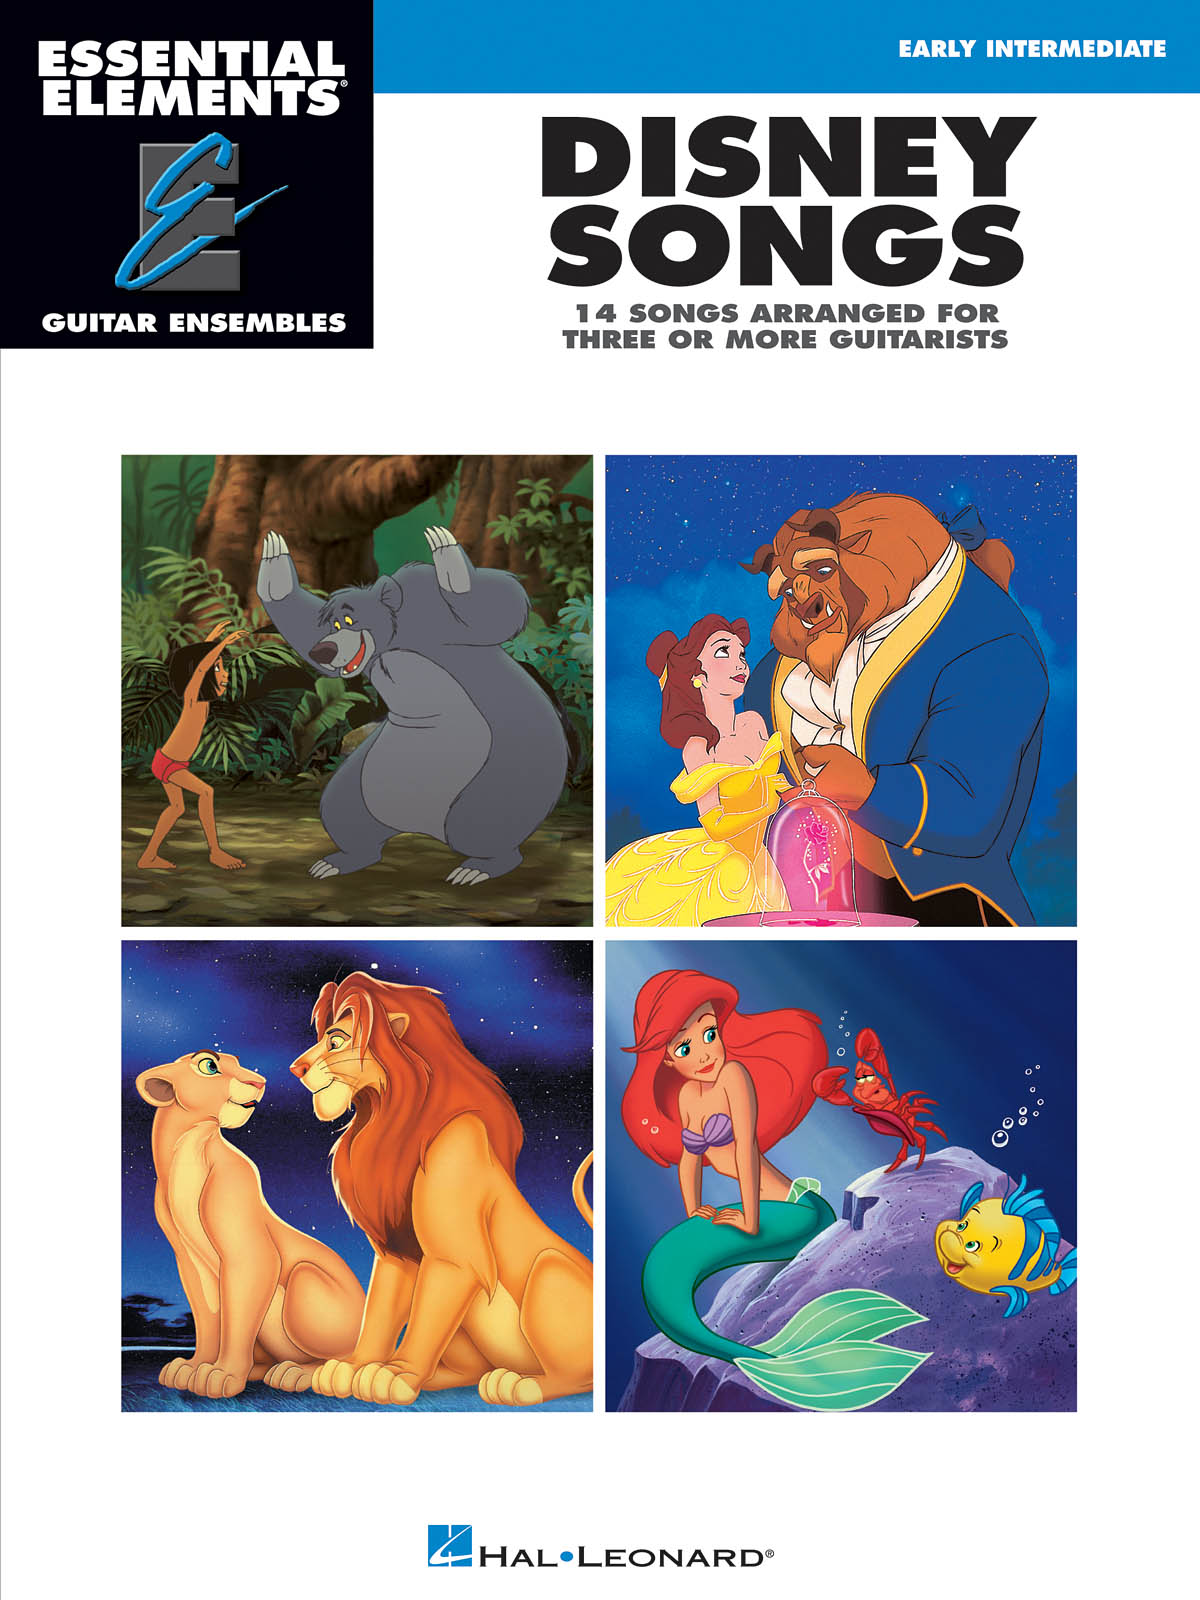 Essential Elements Guitar Ens - Disney Songs - 14 Disney Favorites Arranged for Three or More Guitarists